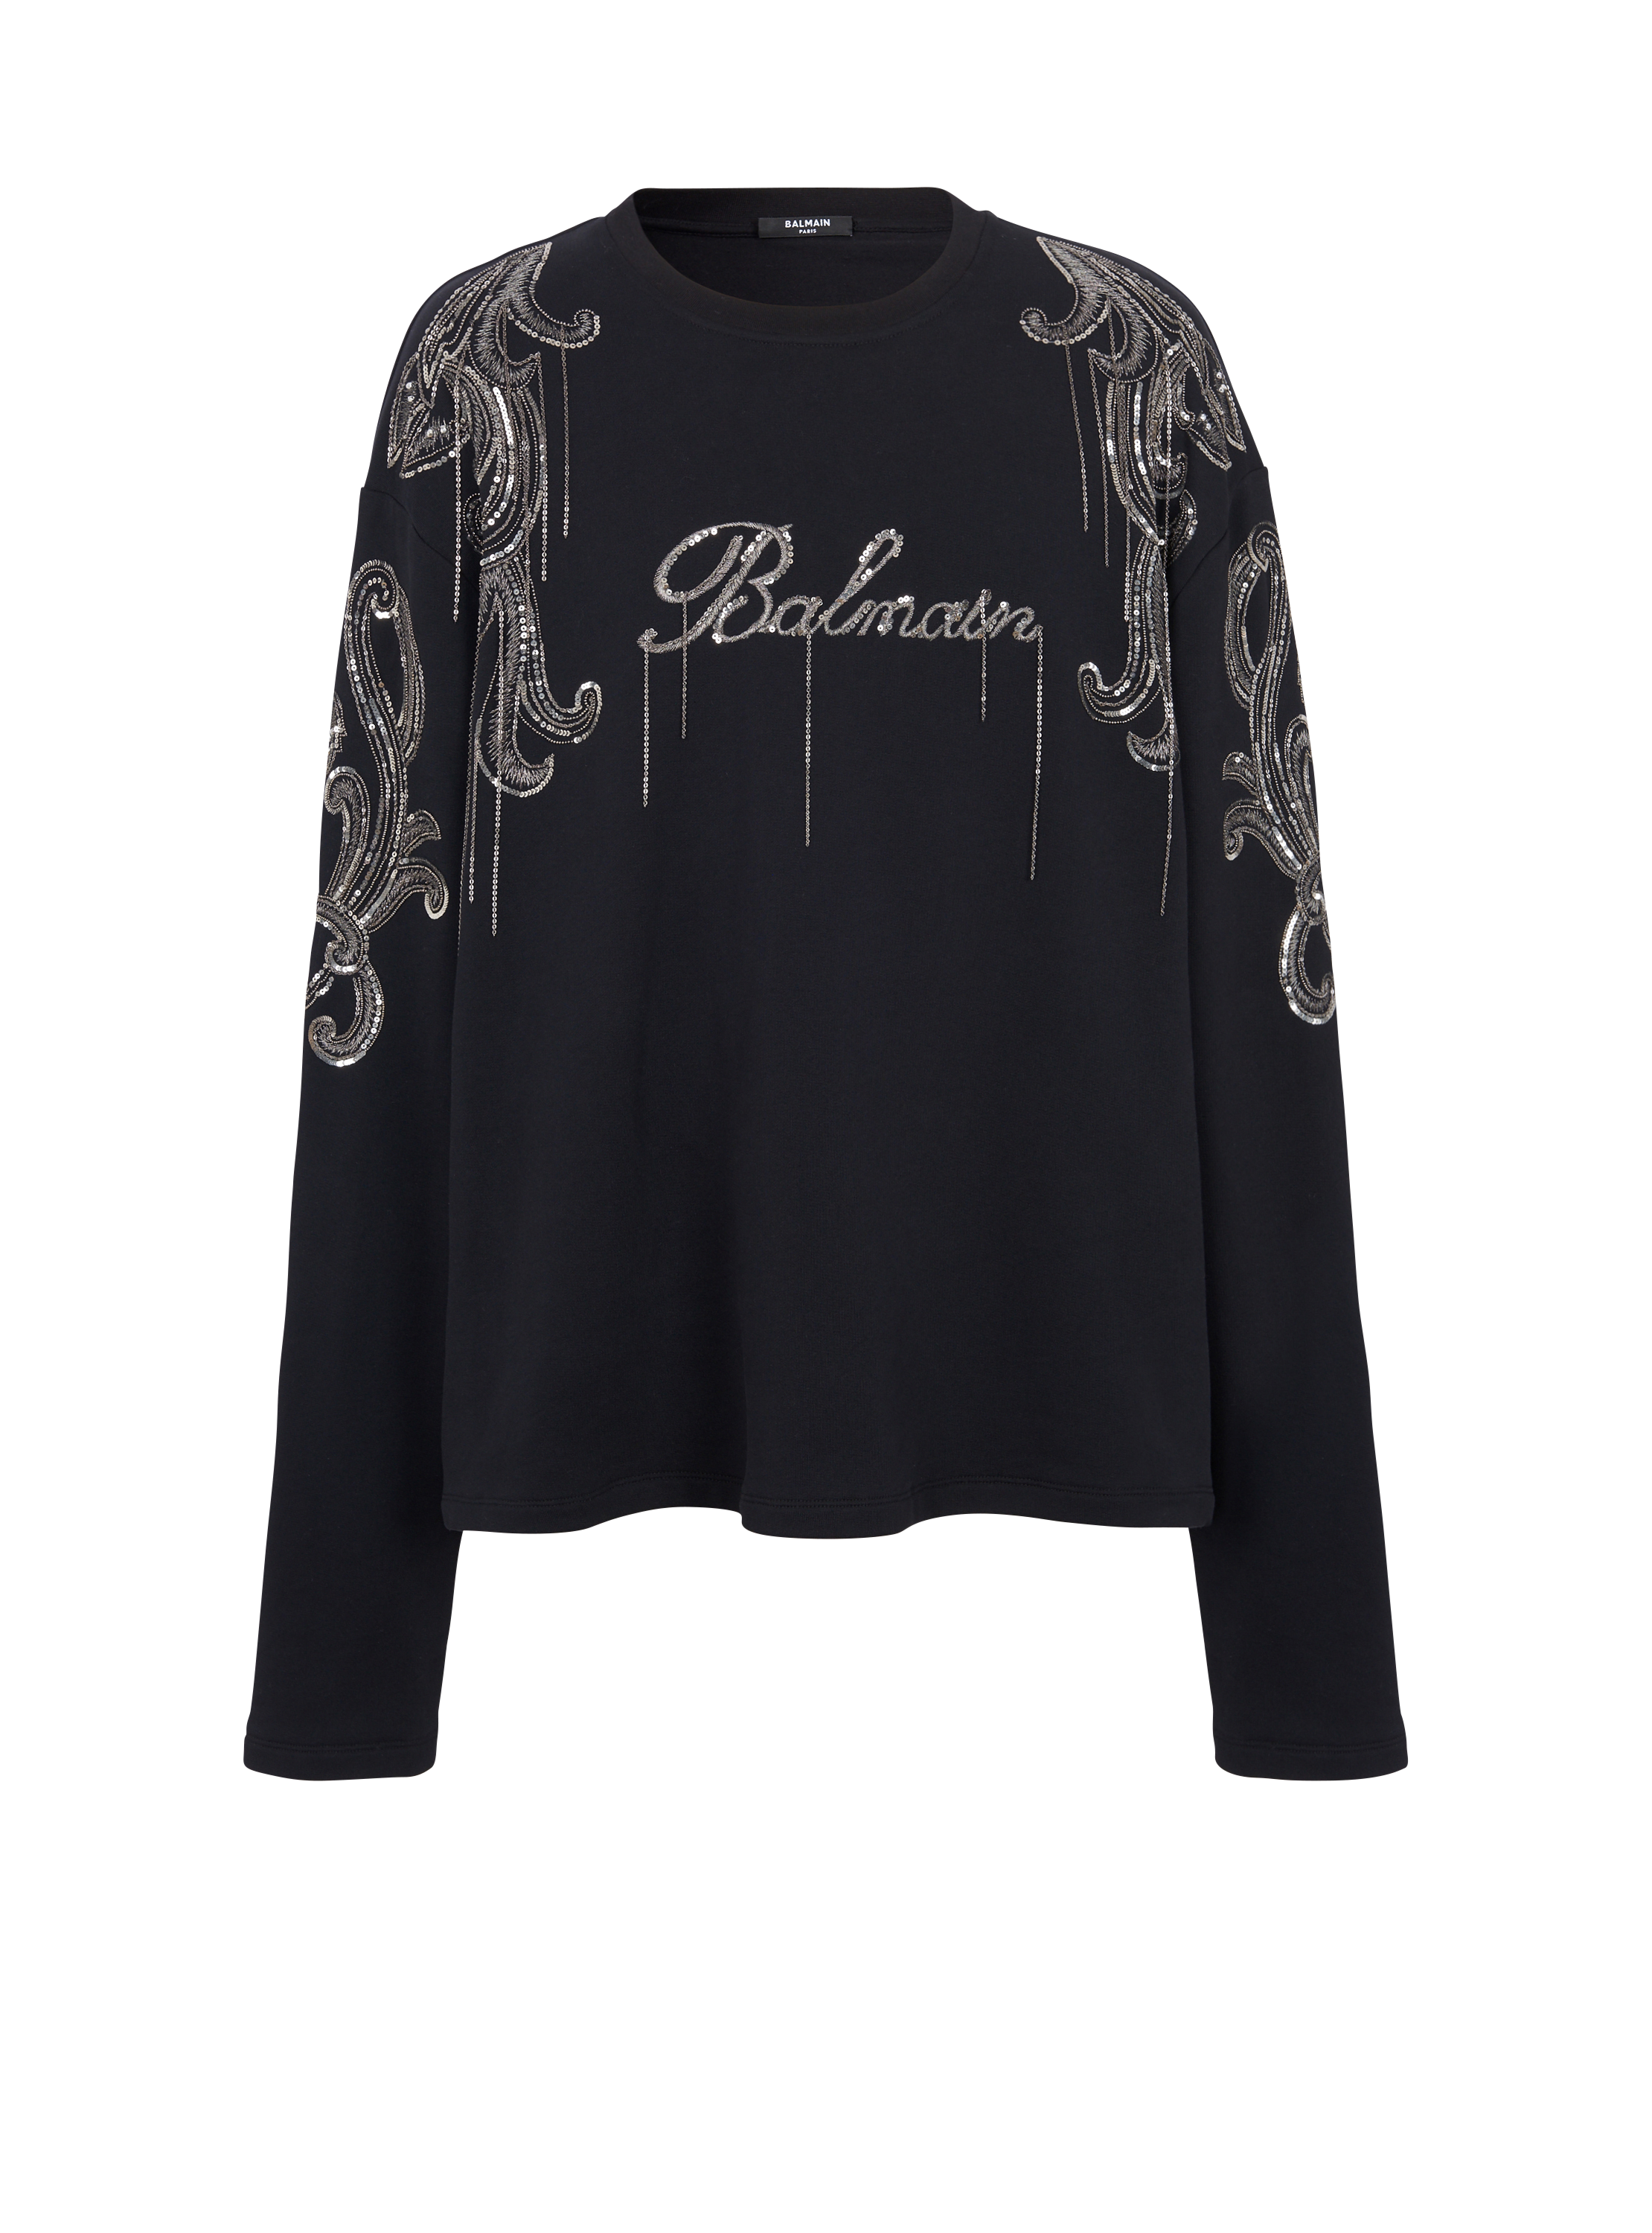 Balmain Signature chain embroidered sweater, black, hi-res